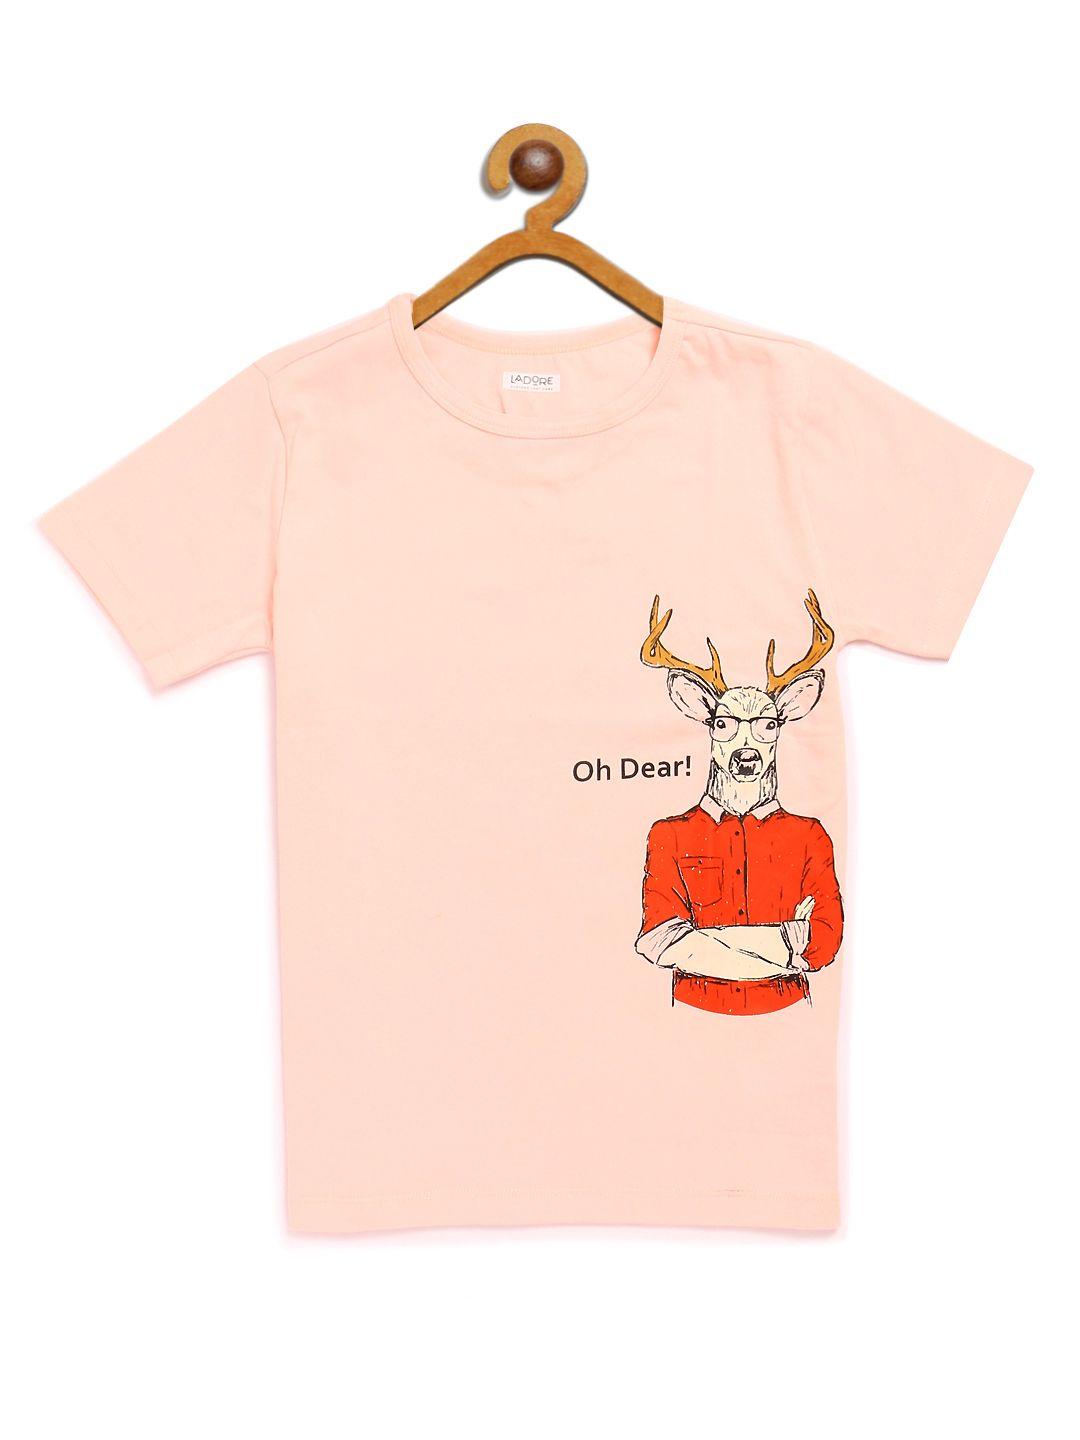 ladore unisex kids peach-coloured printed round neck t-shirt